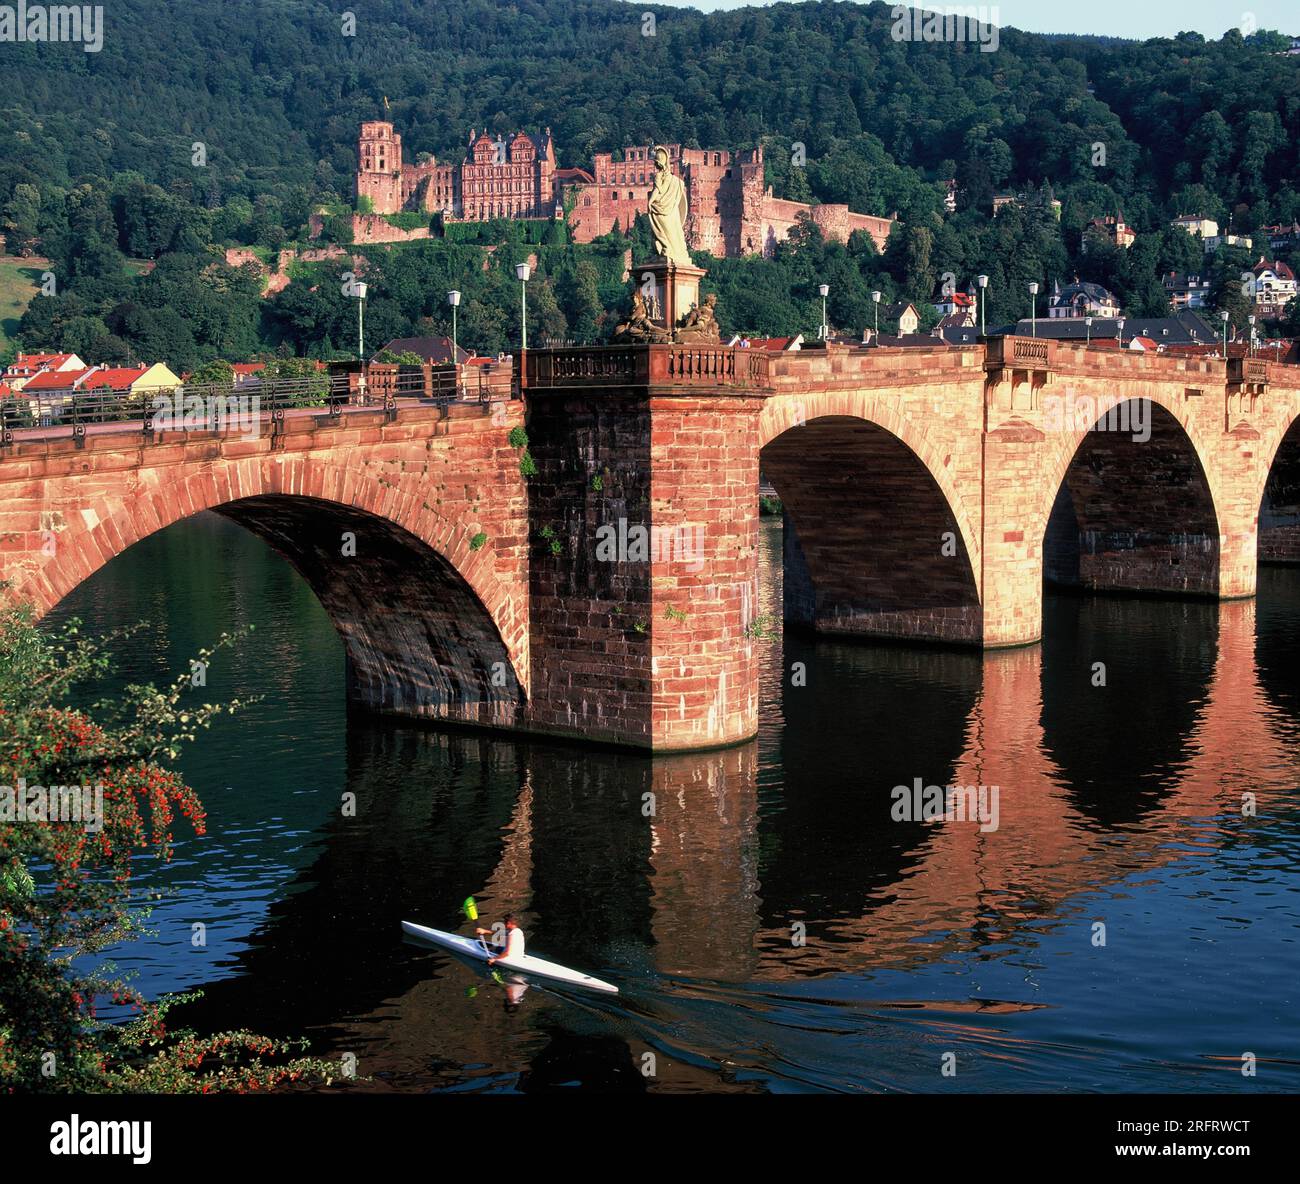 Germania. Heidelberg. Ponte sul fiume Neckar nel tardo pomeriggio. Canoista sul fiume. Foto Stock